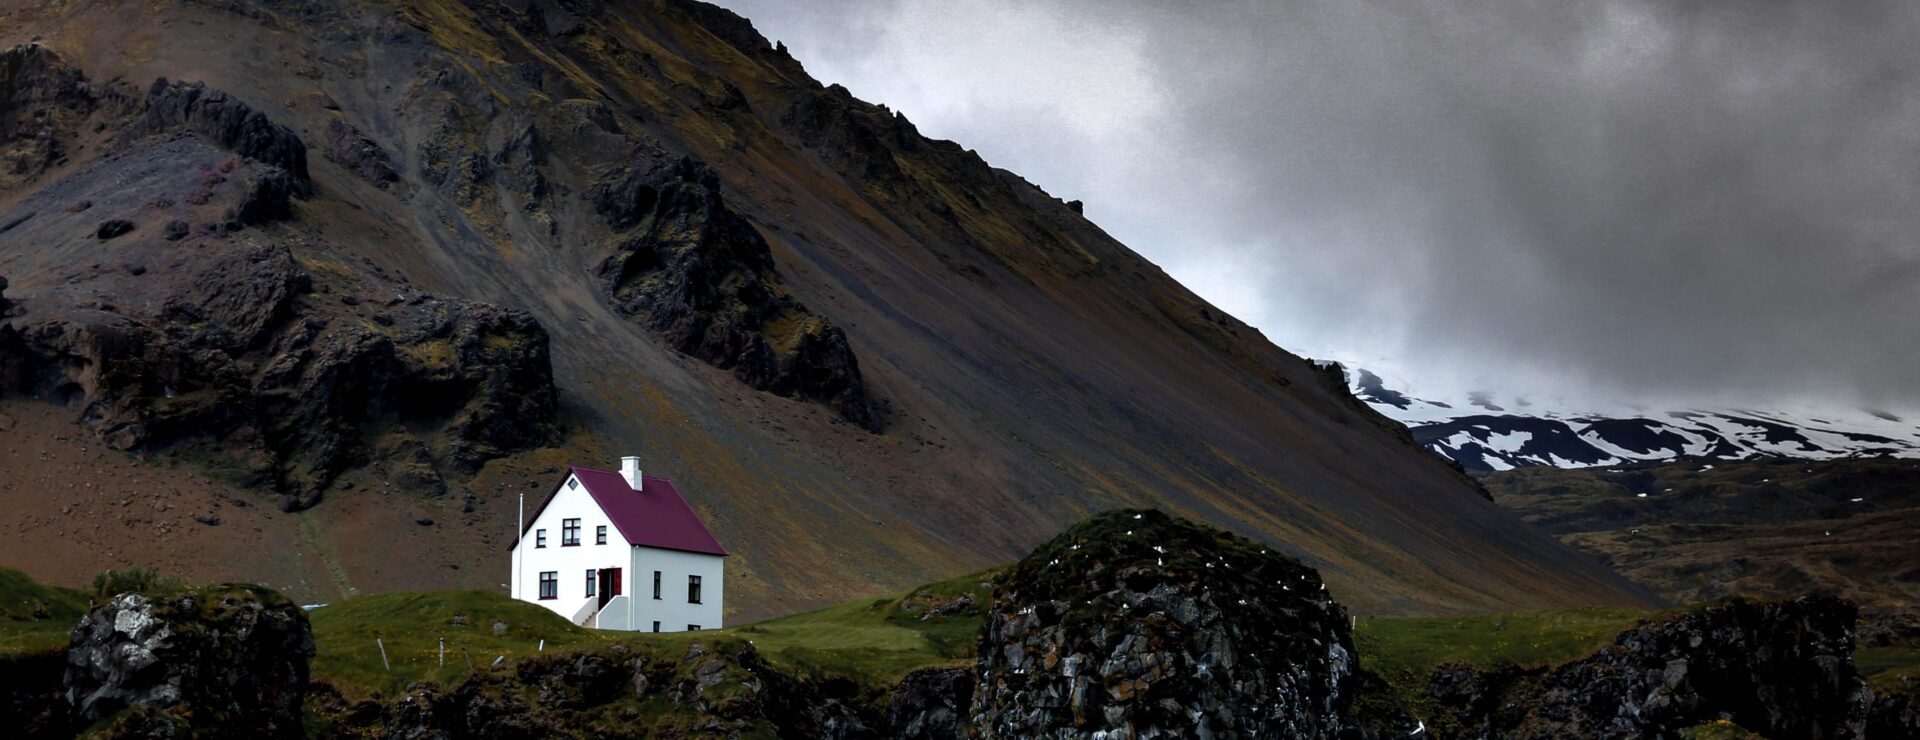 Over IJsland accommodatie